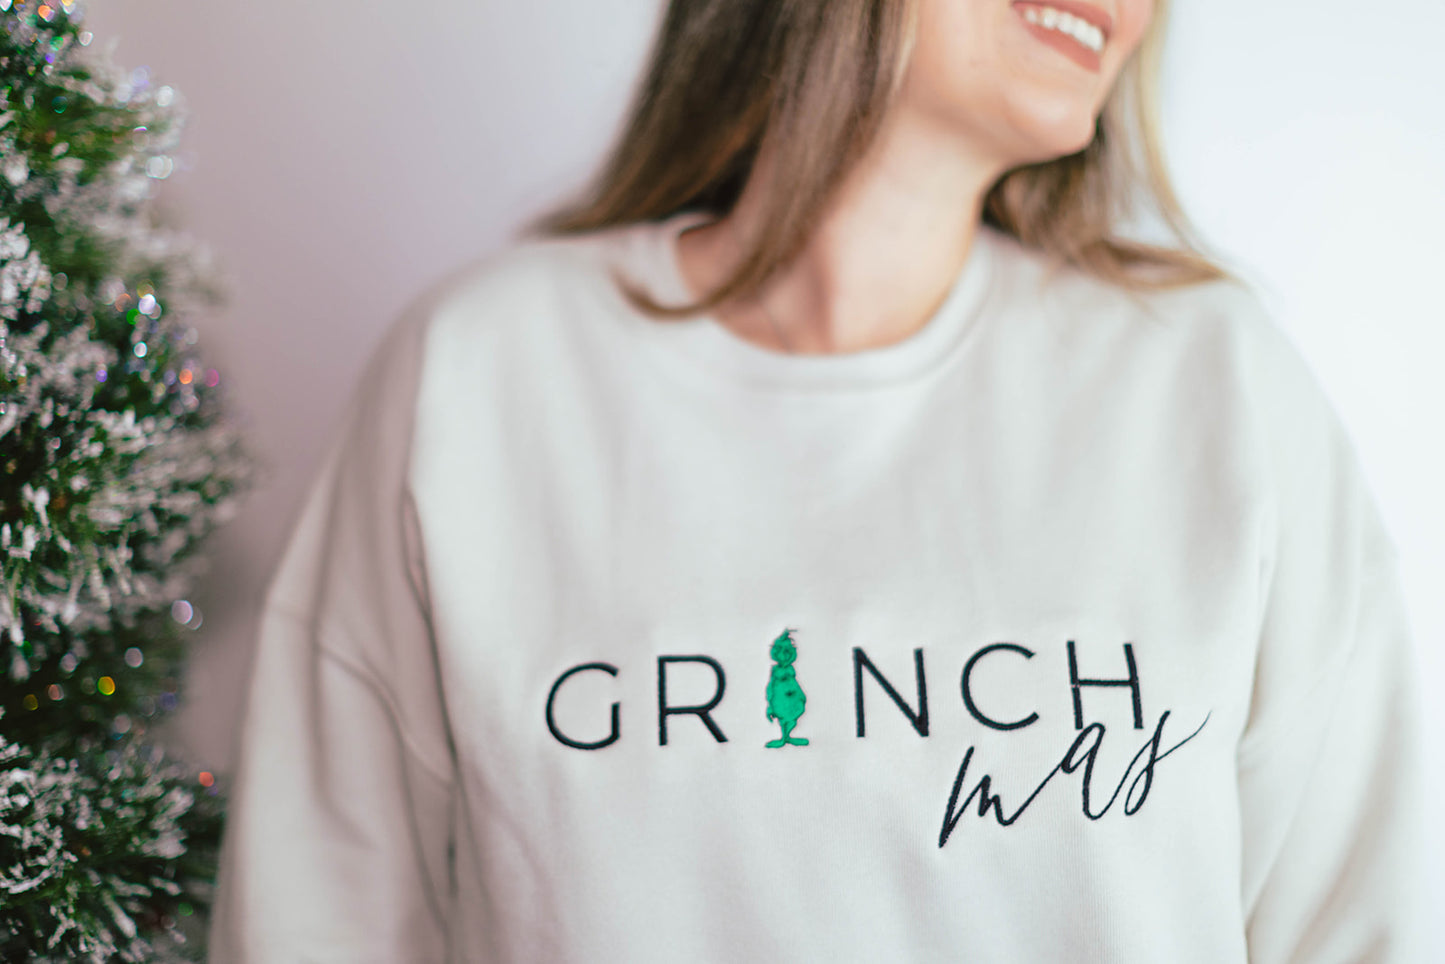 Grinchmas (ADULT) Embroidered Sweatshirt